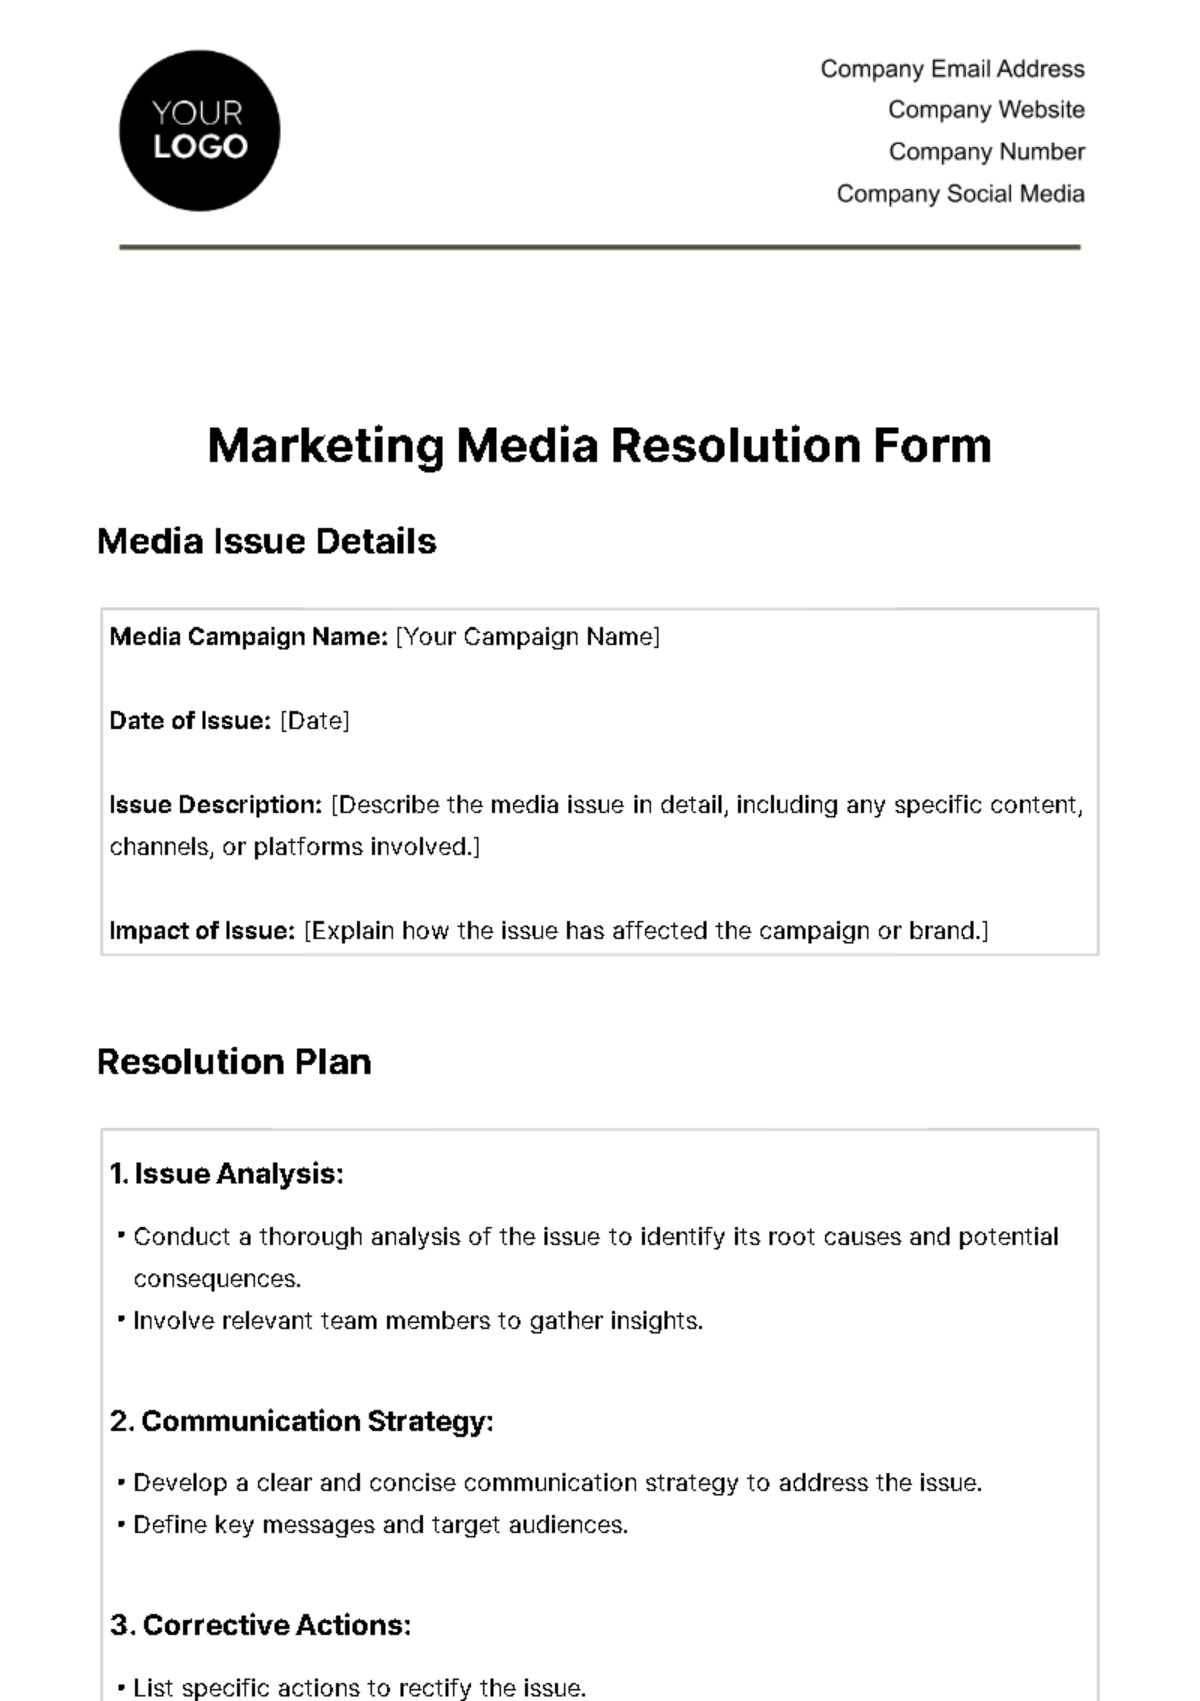 Free Marketing Media Resolution Form Template